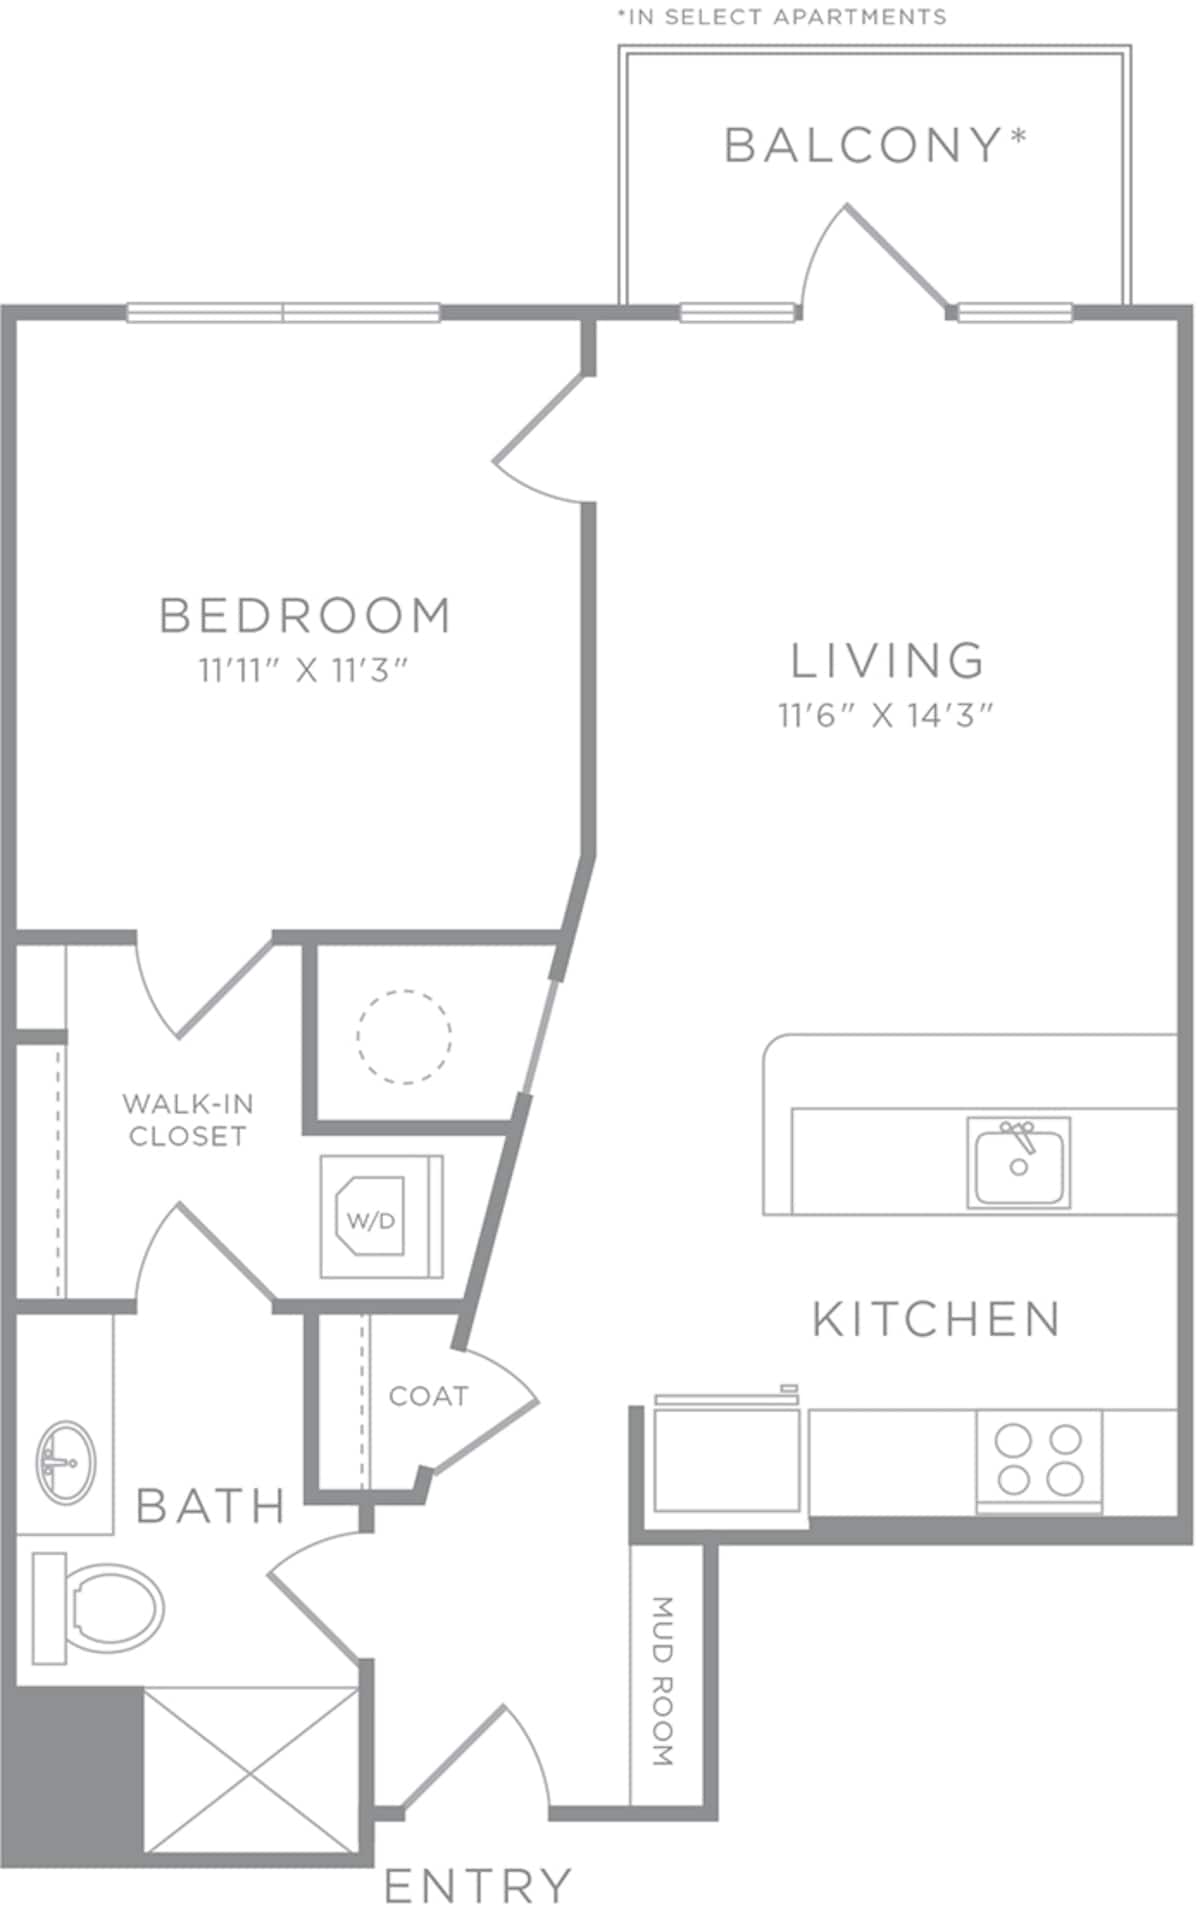 Floorplan diagram for A5.1, showing 1 bedroom